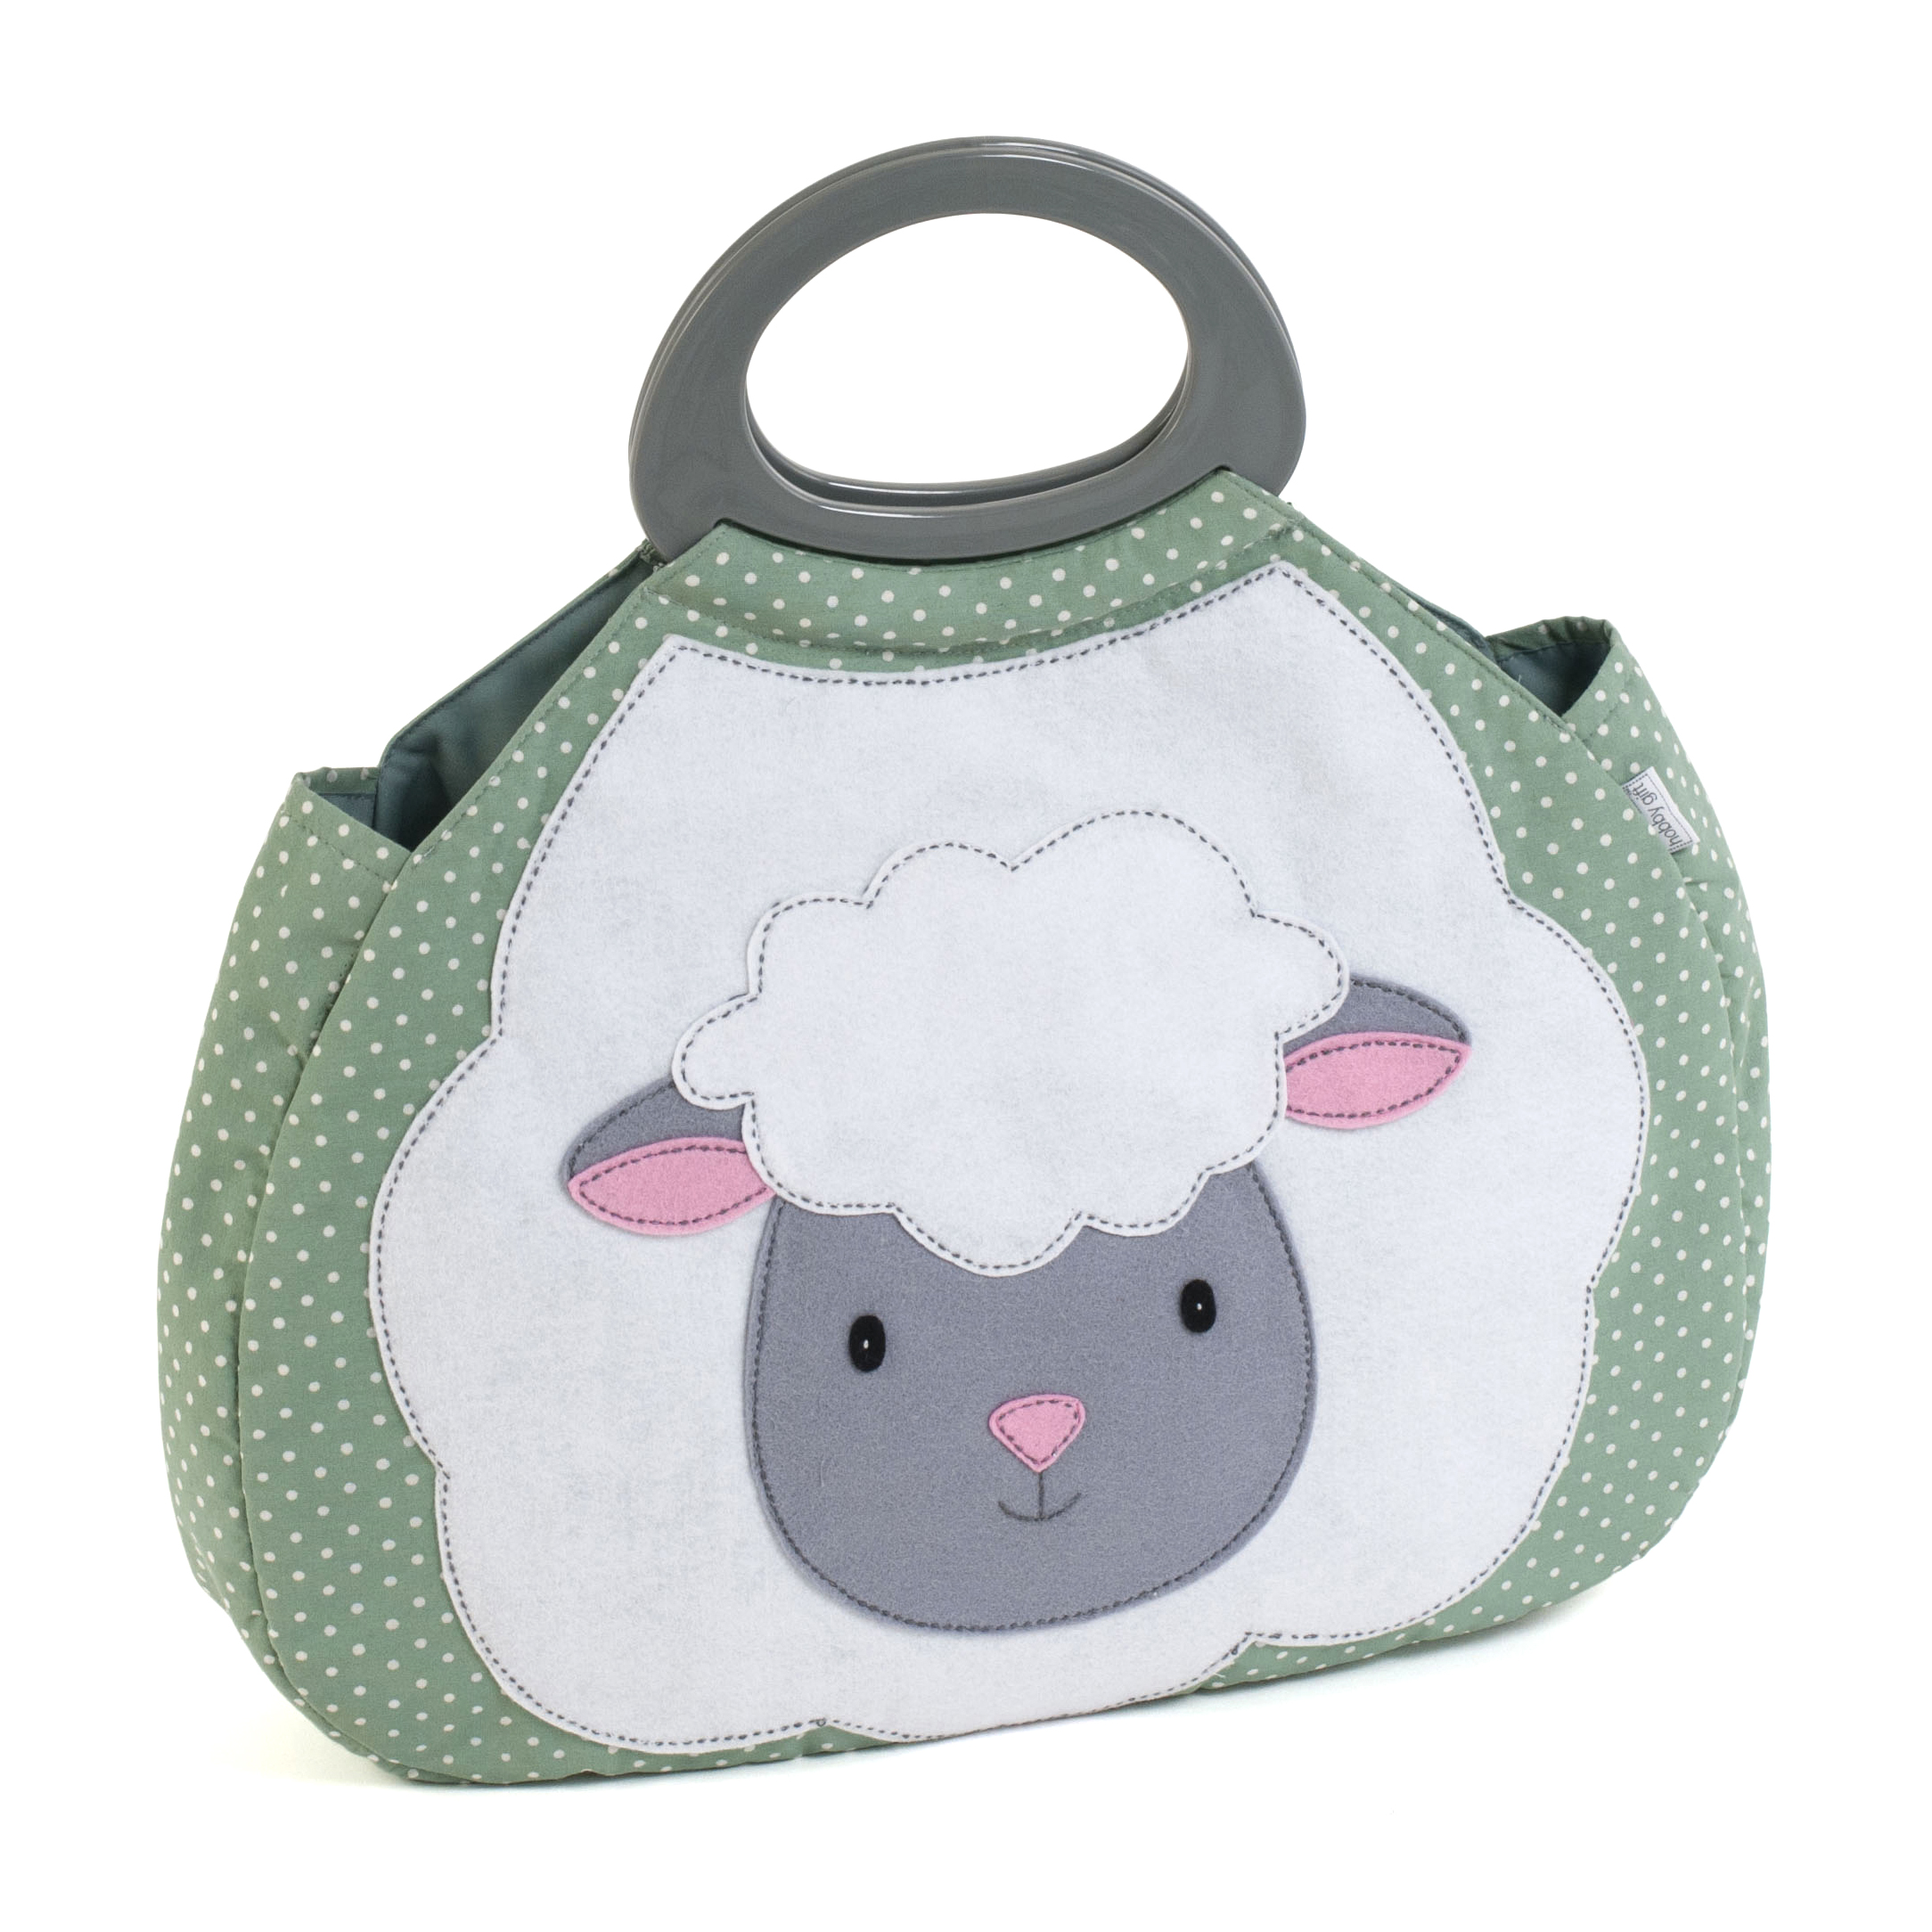 Knit Happens - Applique Sheep Knitting Bag